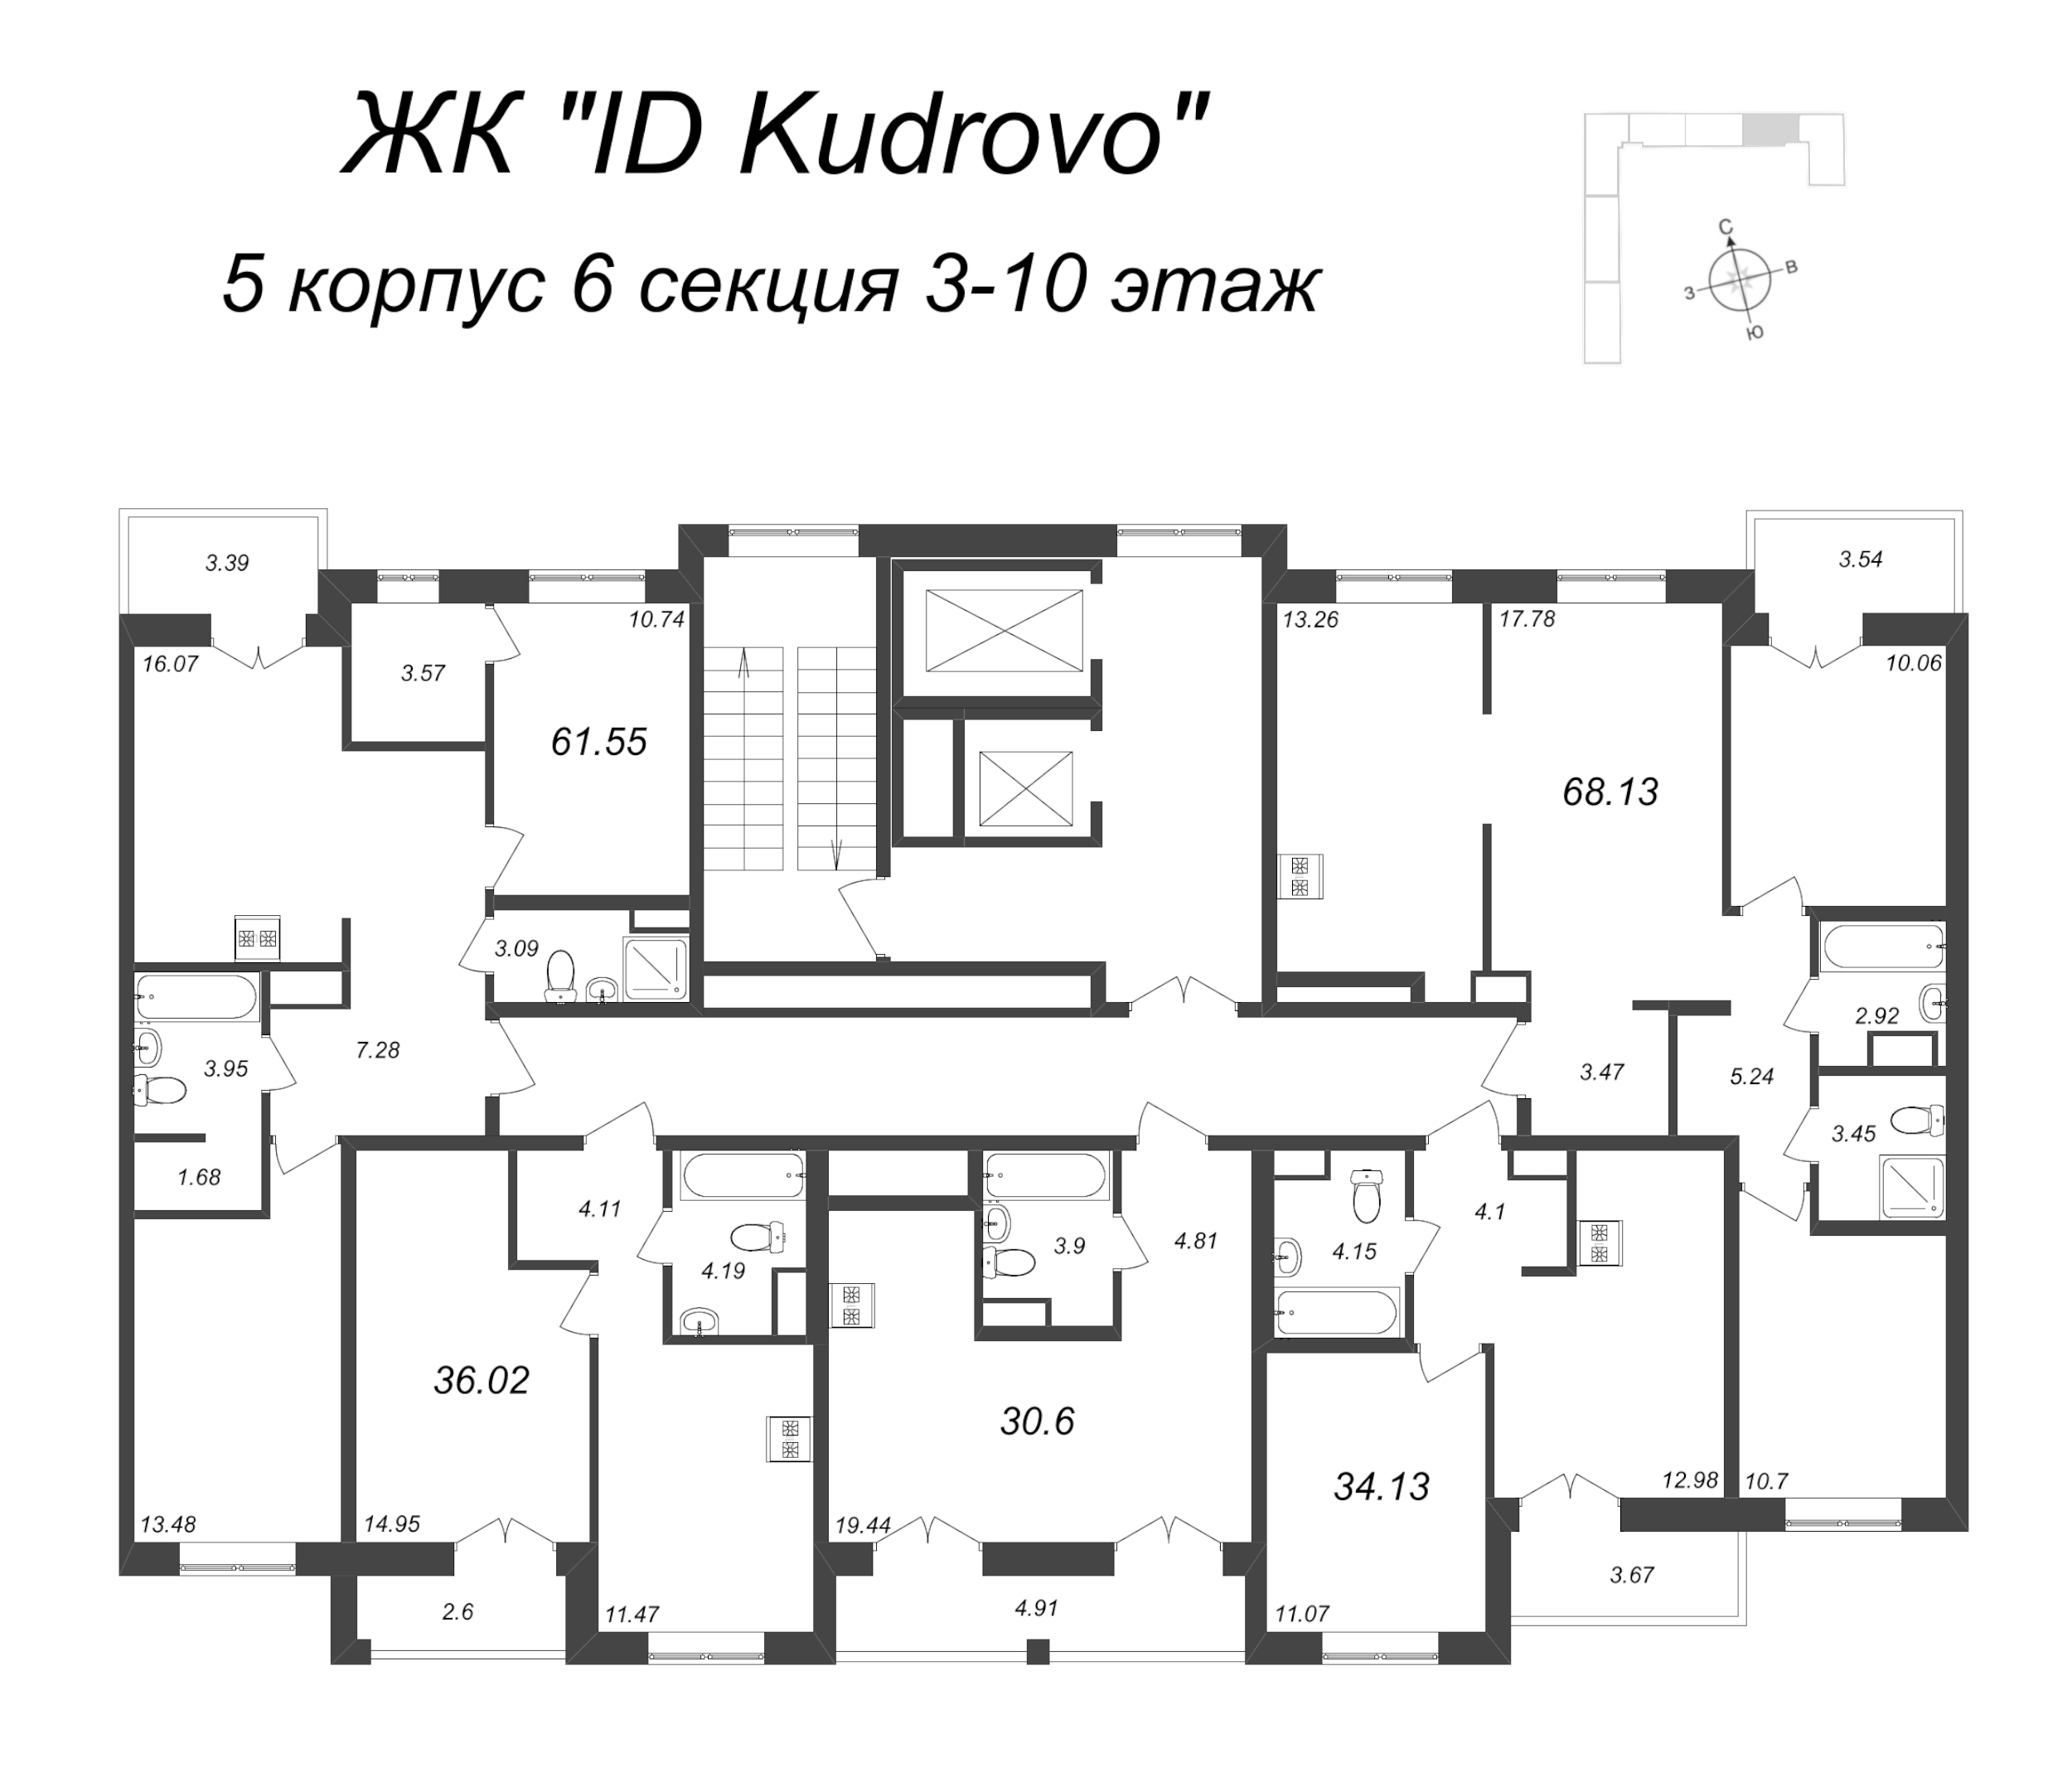 3-комнатная квартира, 68.13 м² в ЖК "ID Kudrovo" - планировка этажа